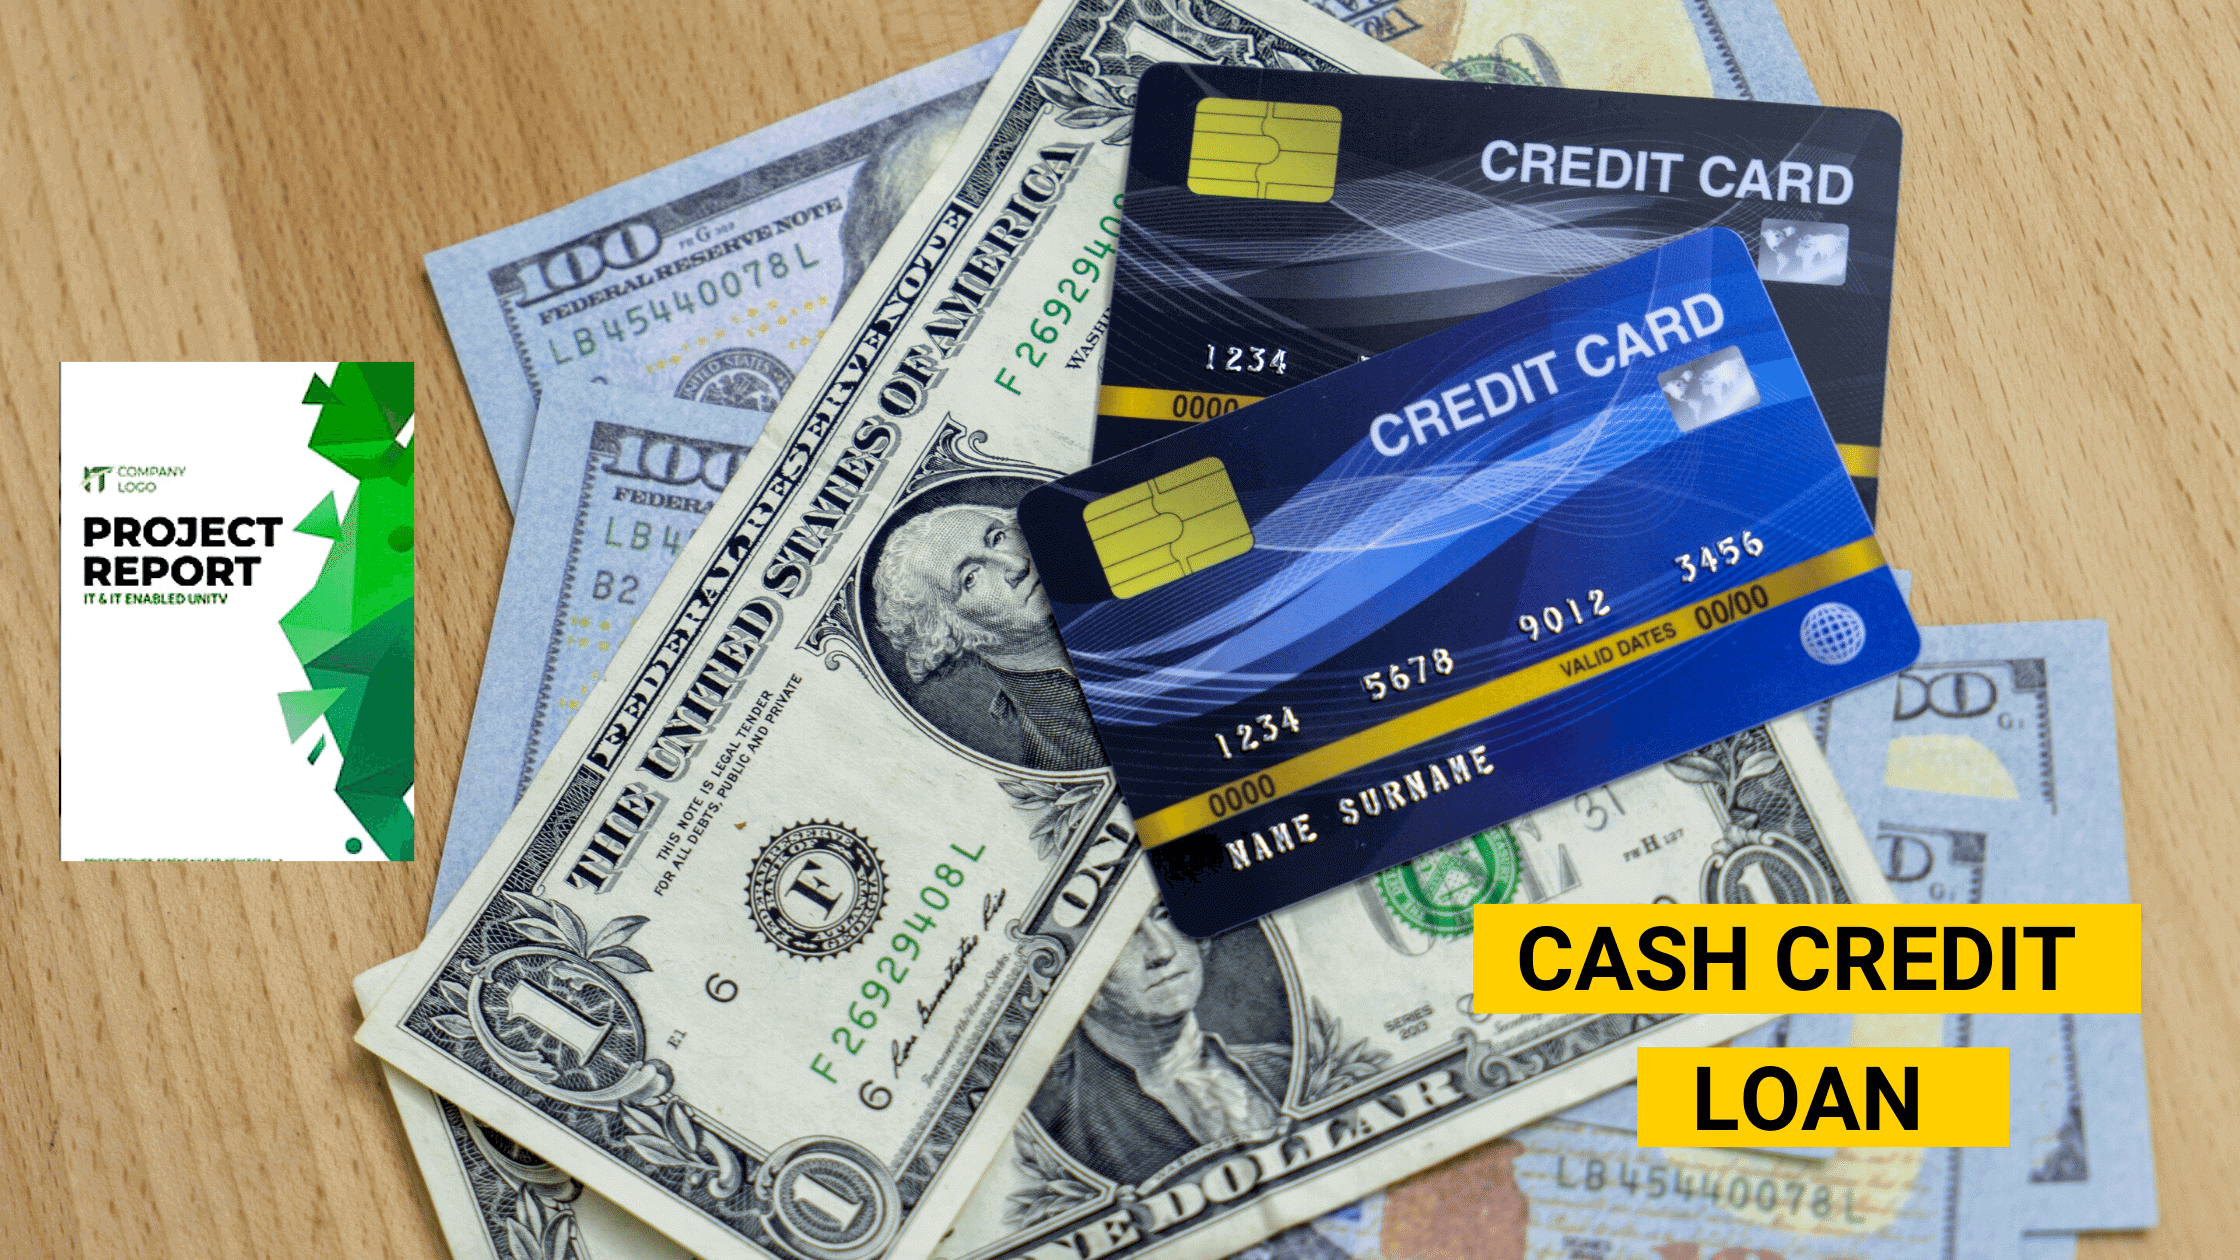 Loan against credit card